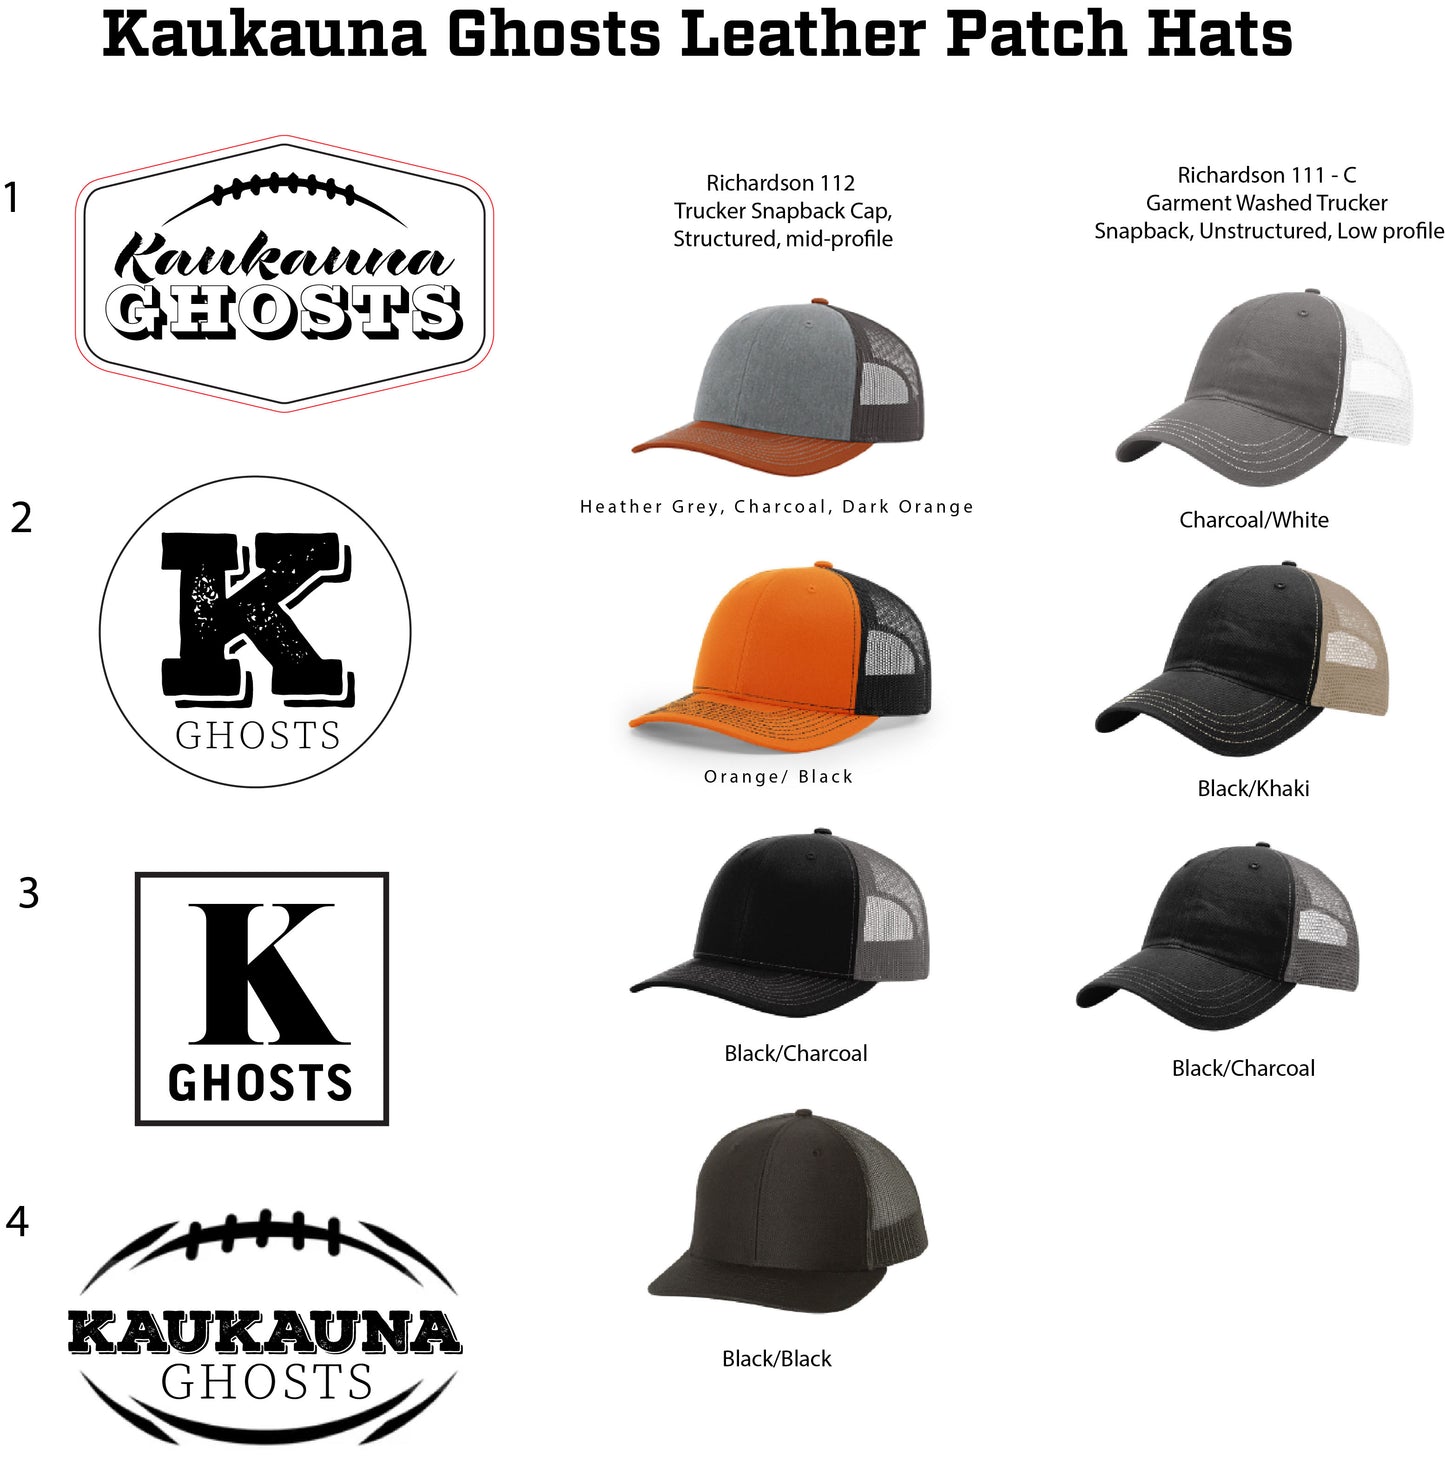 Kaukauna Football Leather Patch Hats